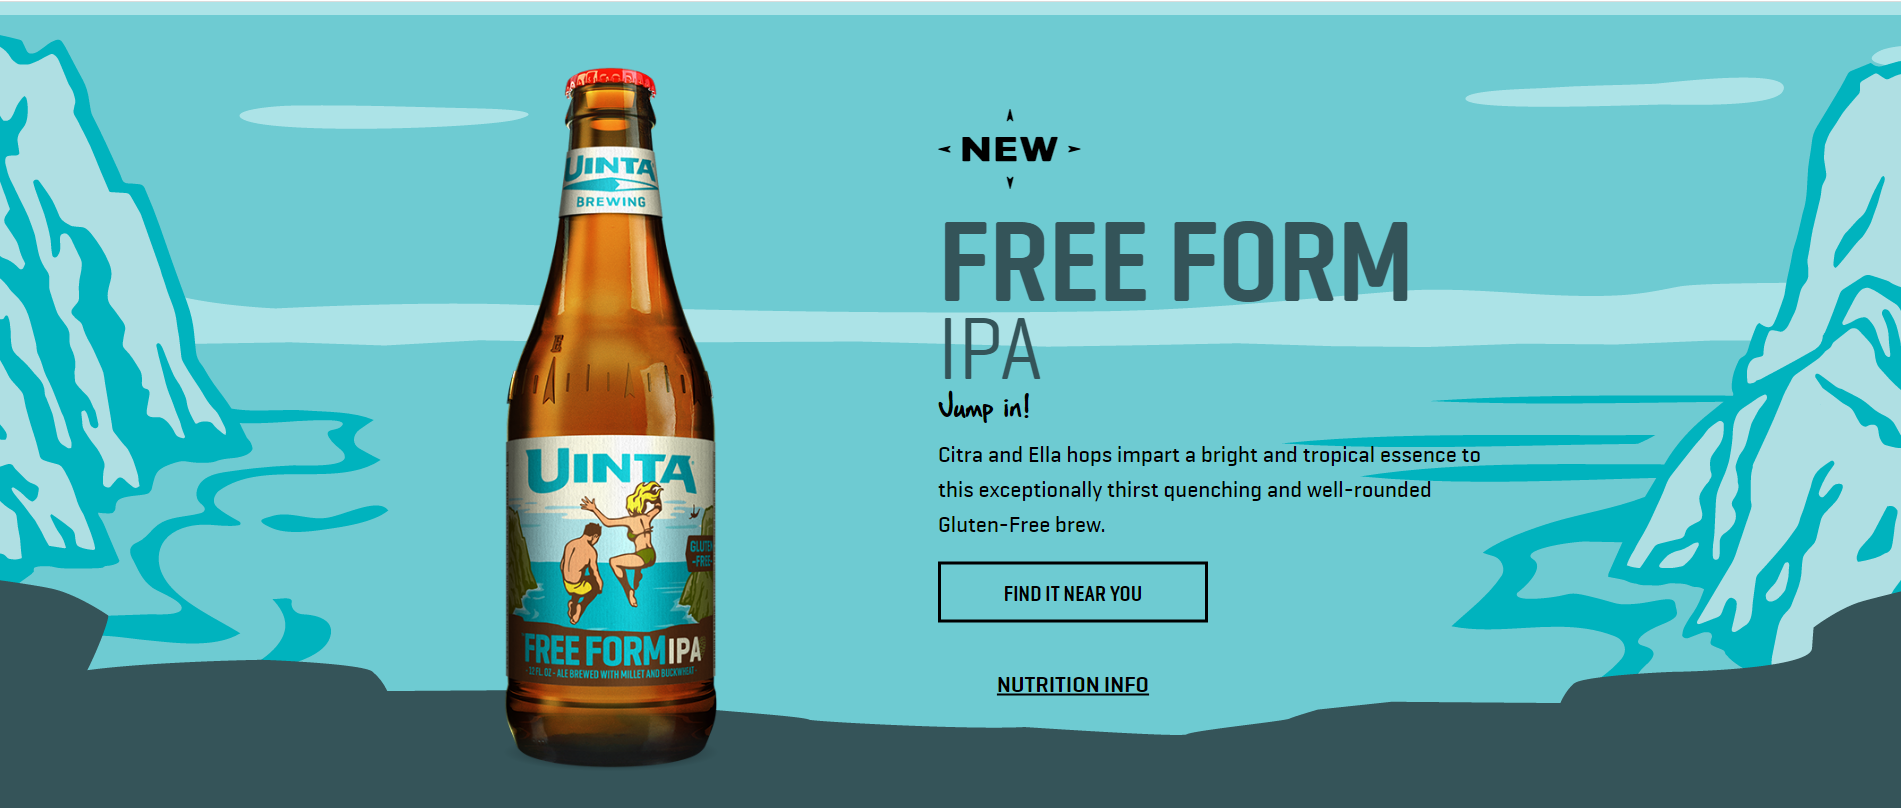 Uinta's Free Form IPA label is as simple as its beer is tasty.